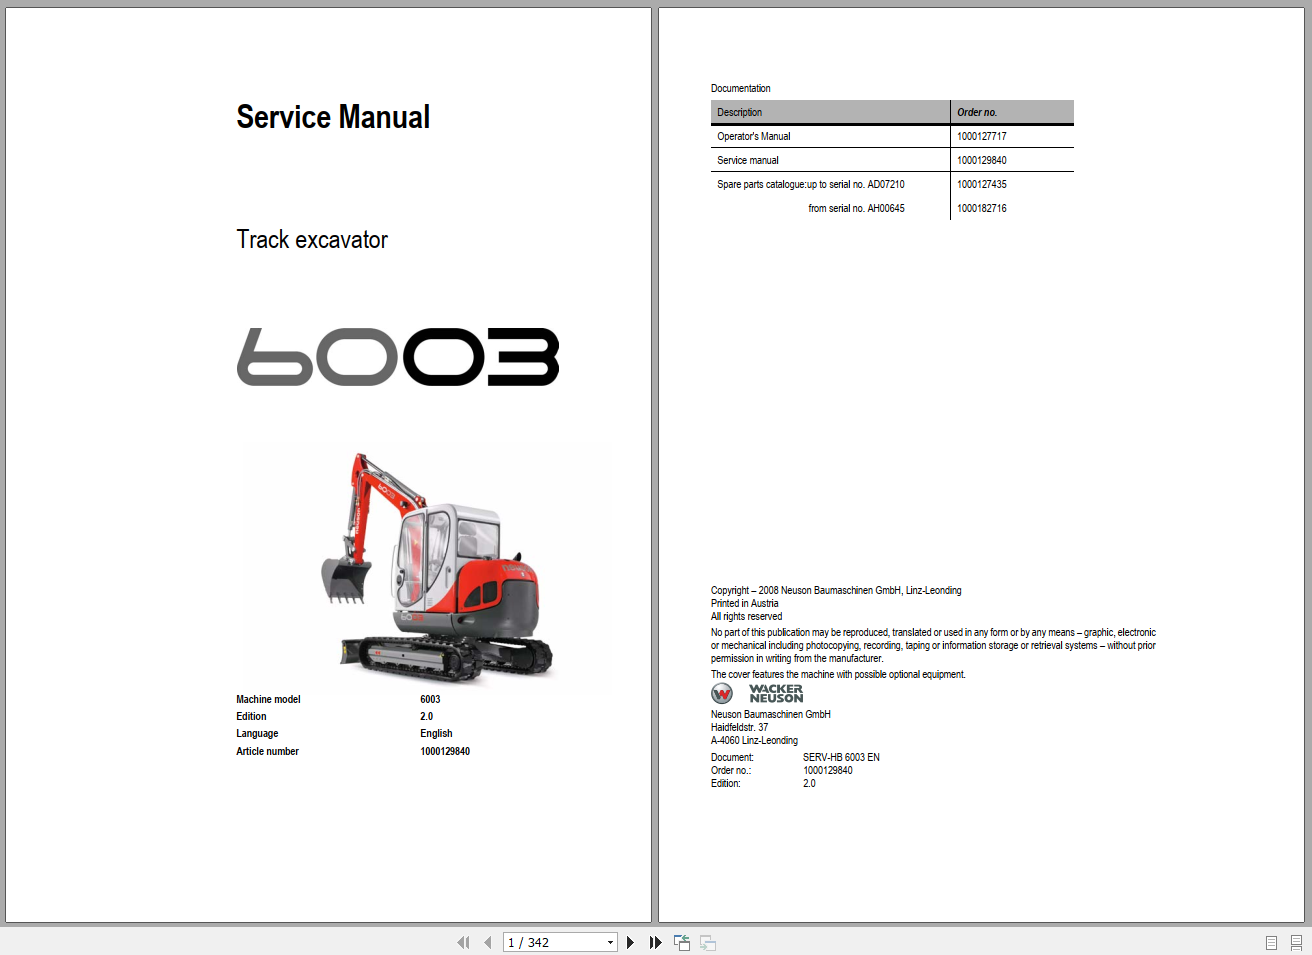 Wacker Neuson EZ38 Crawler excavator SPARE PARTS LIST Manual - PDF DOWNLOAD  by www.heydownloads.com - Issuu